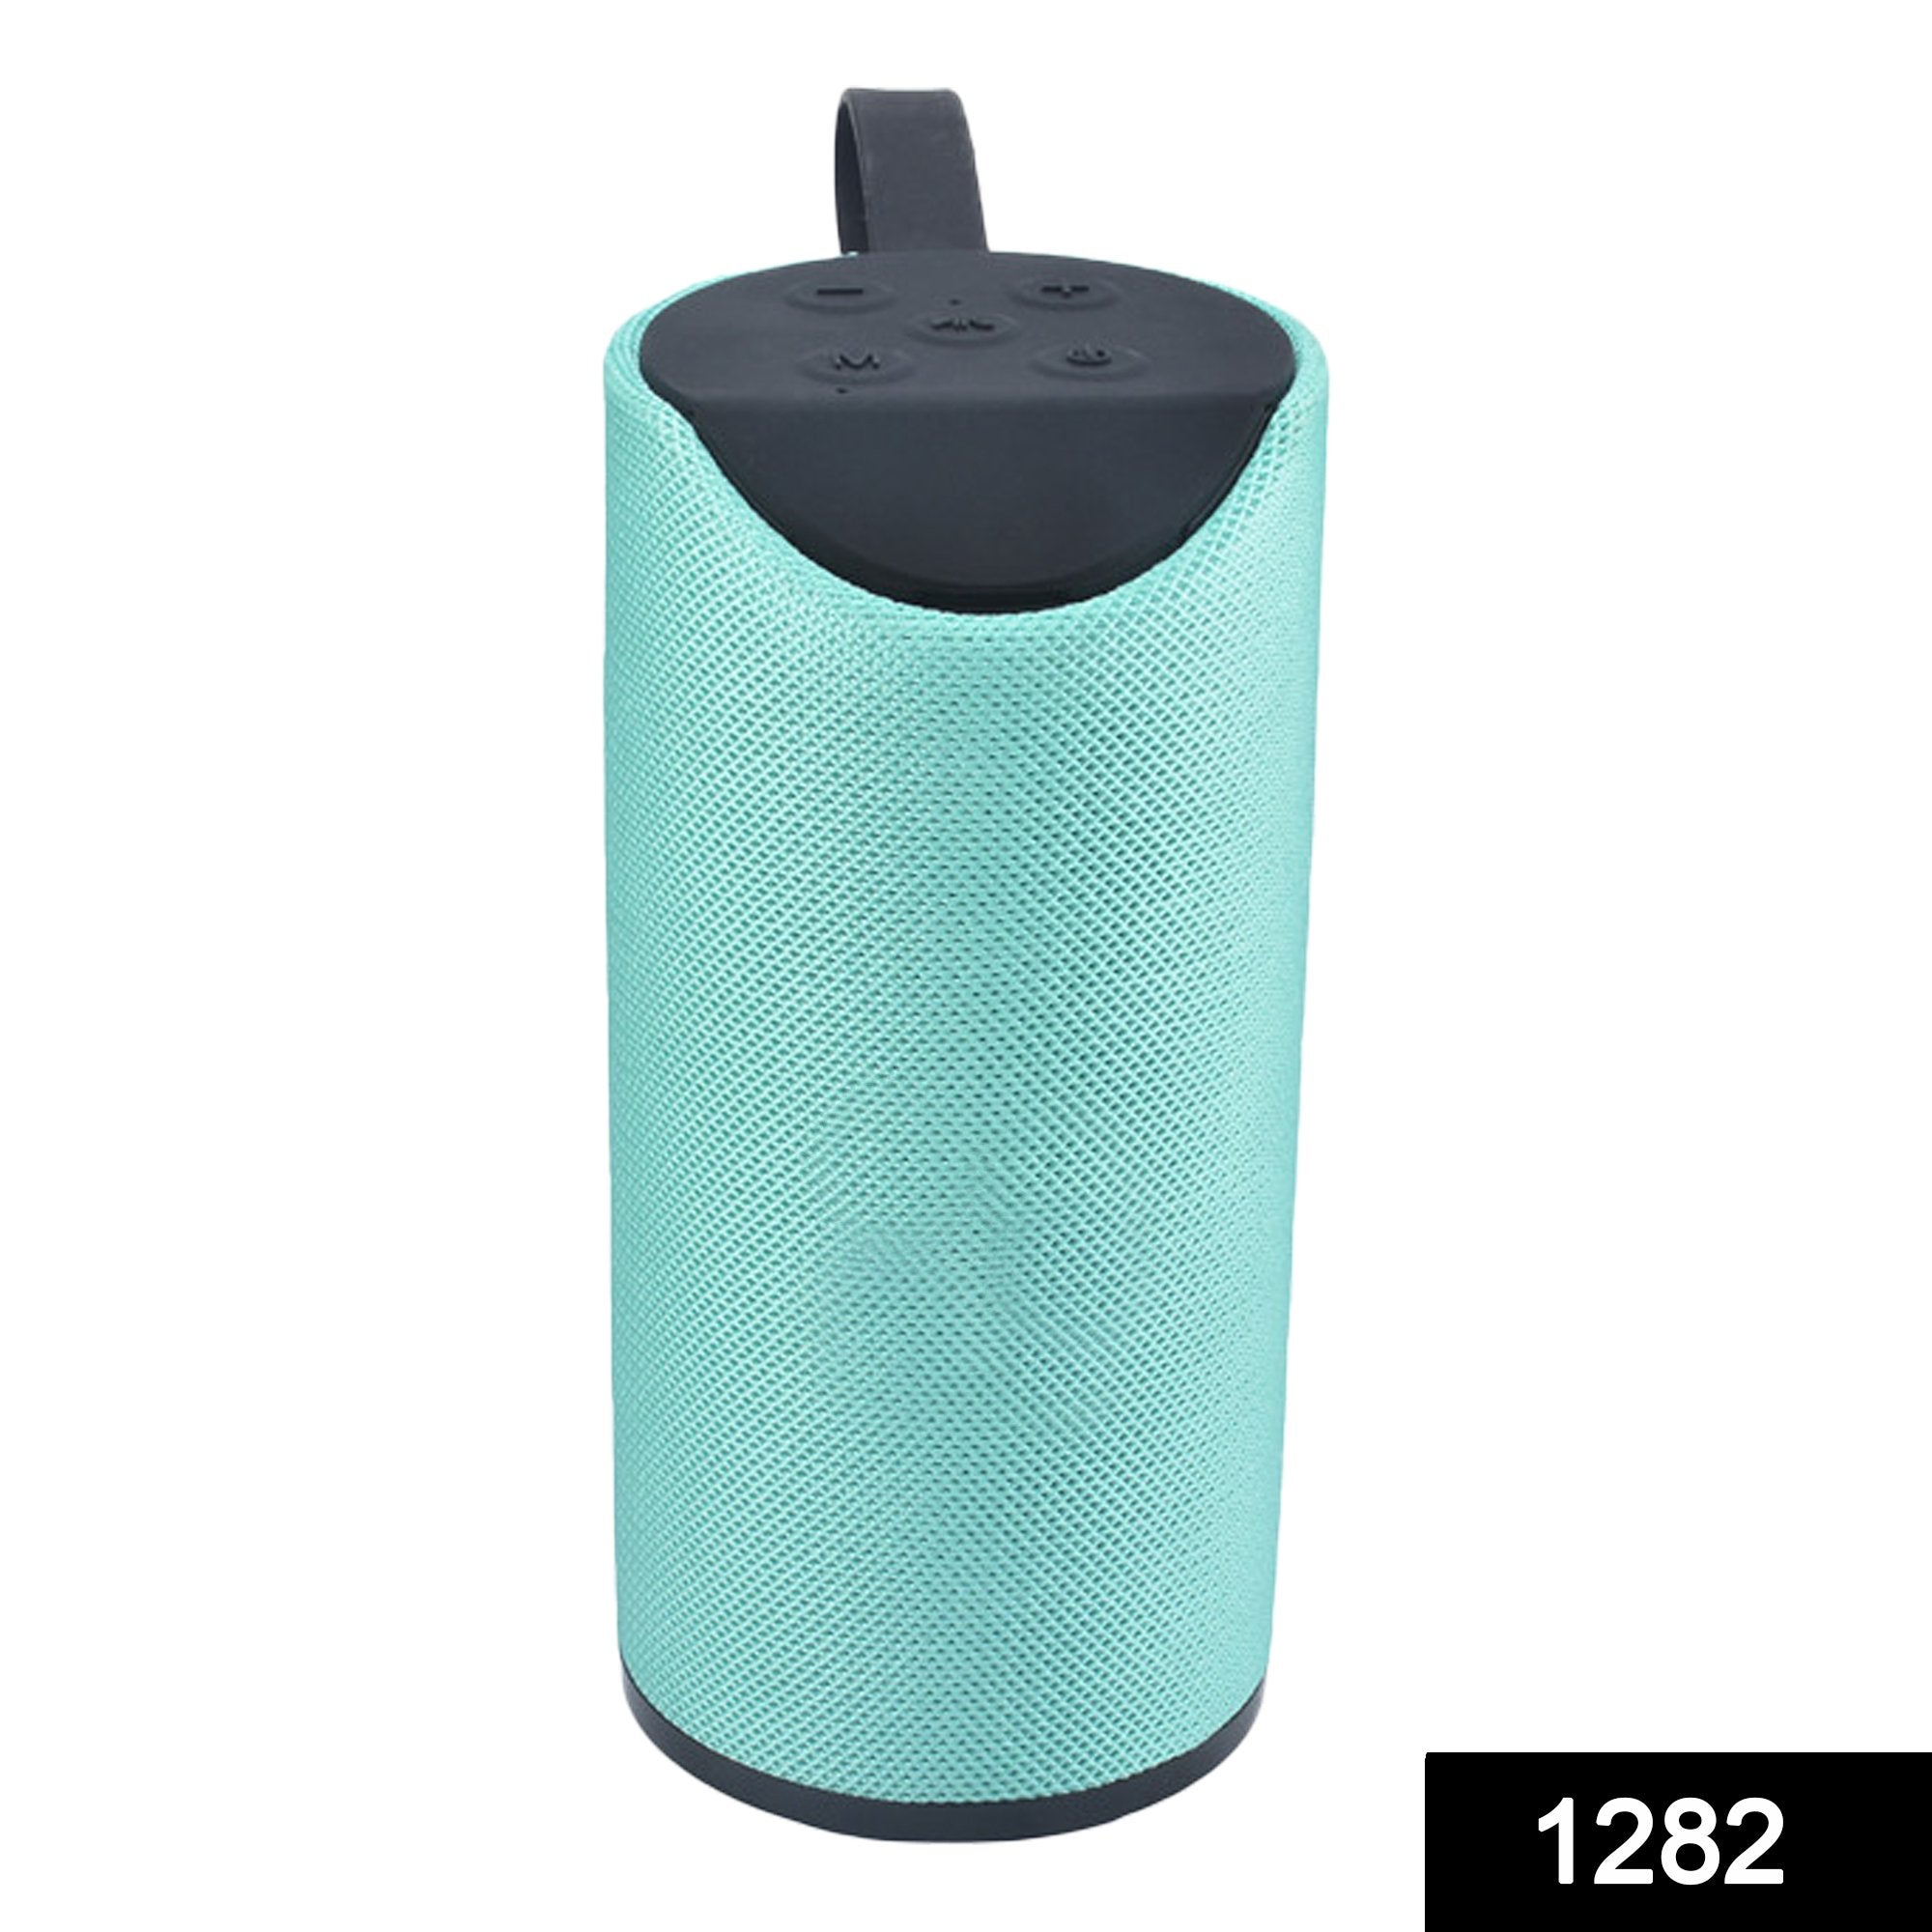 1282 Super Bass Portable Wireless Bluetooth Speaker